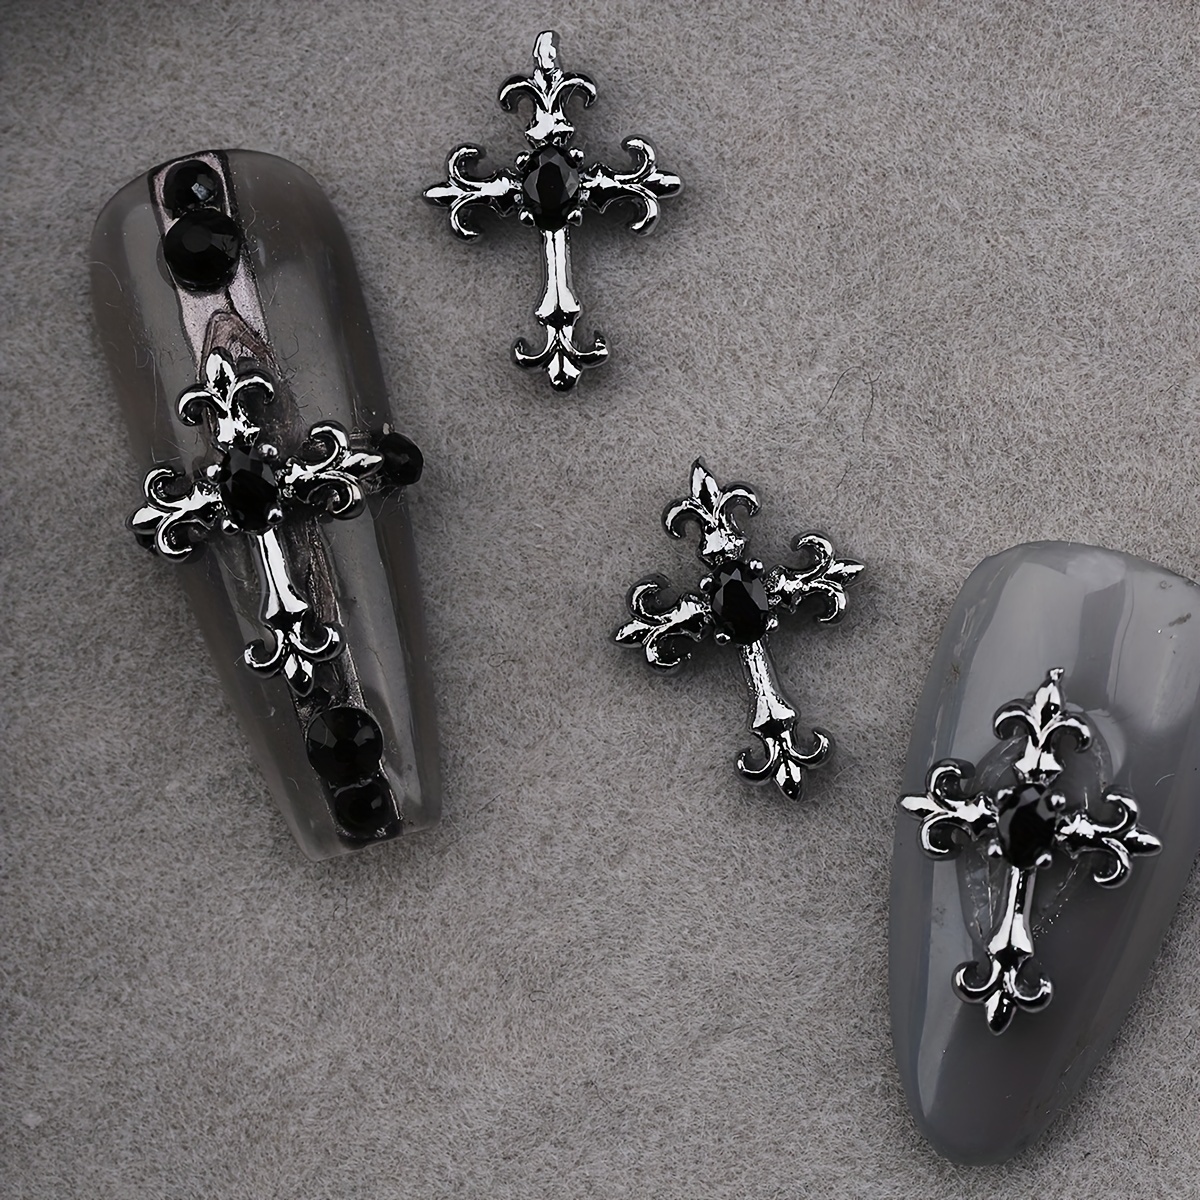 Aylifu 40pcs Round Enamel Cross Charms Alloy Crucifix Charm Pendants for Jewelry Making Bracelet Necklace